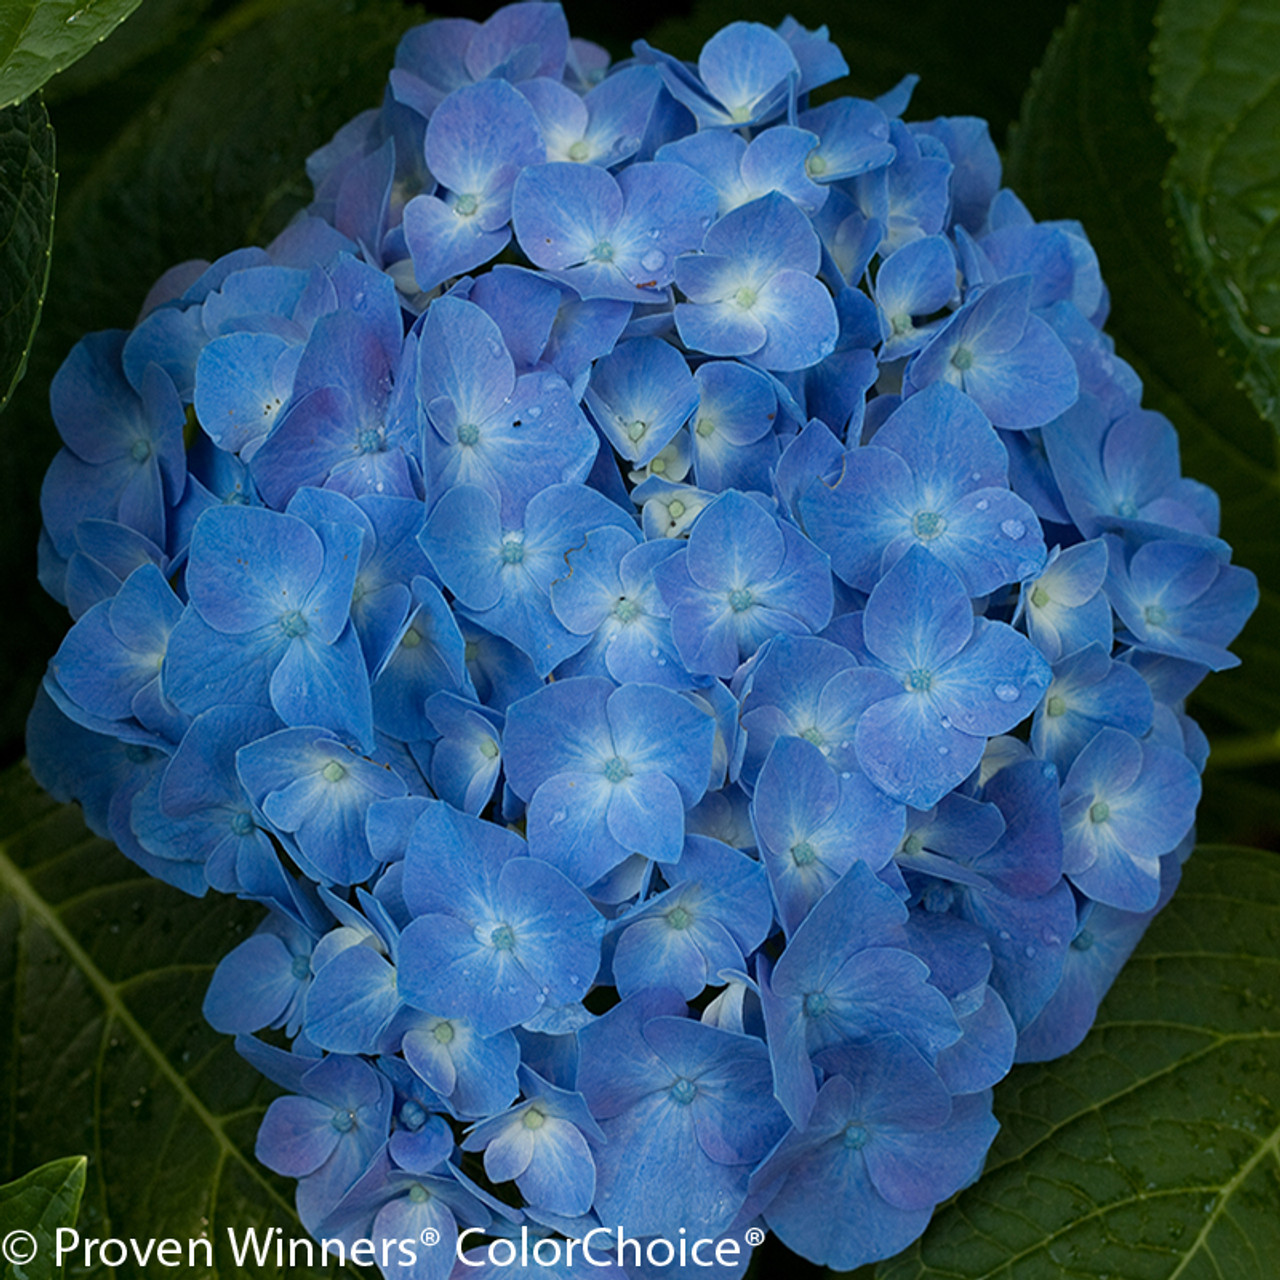 Image of Blue Jangles hydrangea flowers close-up